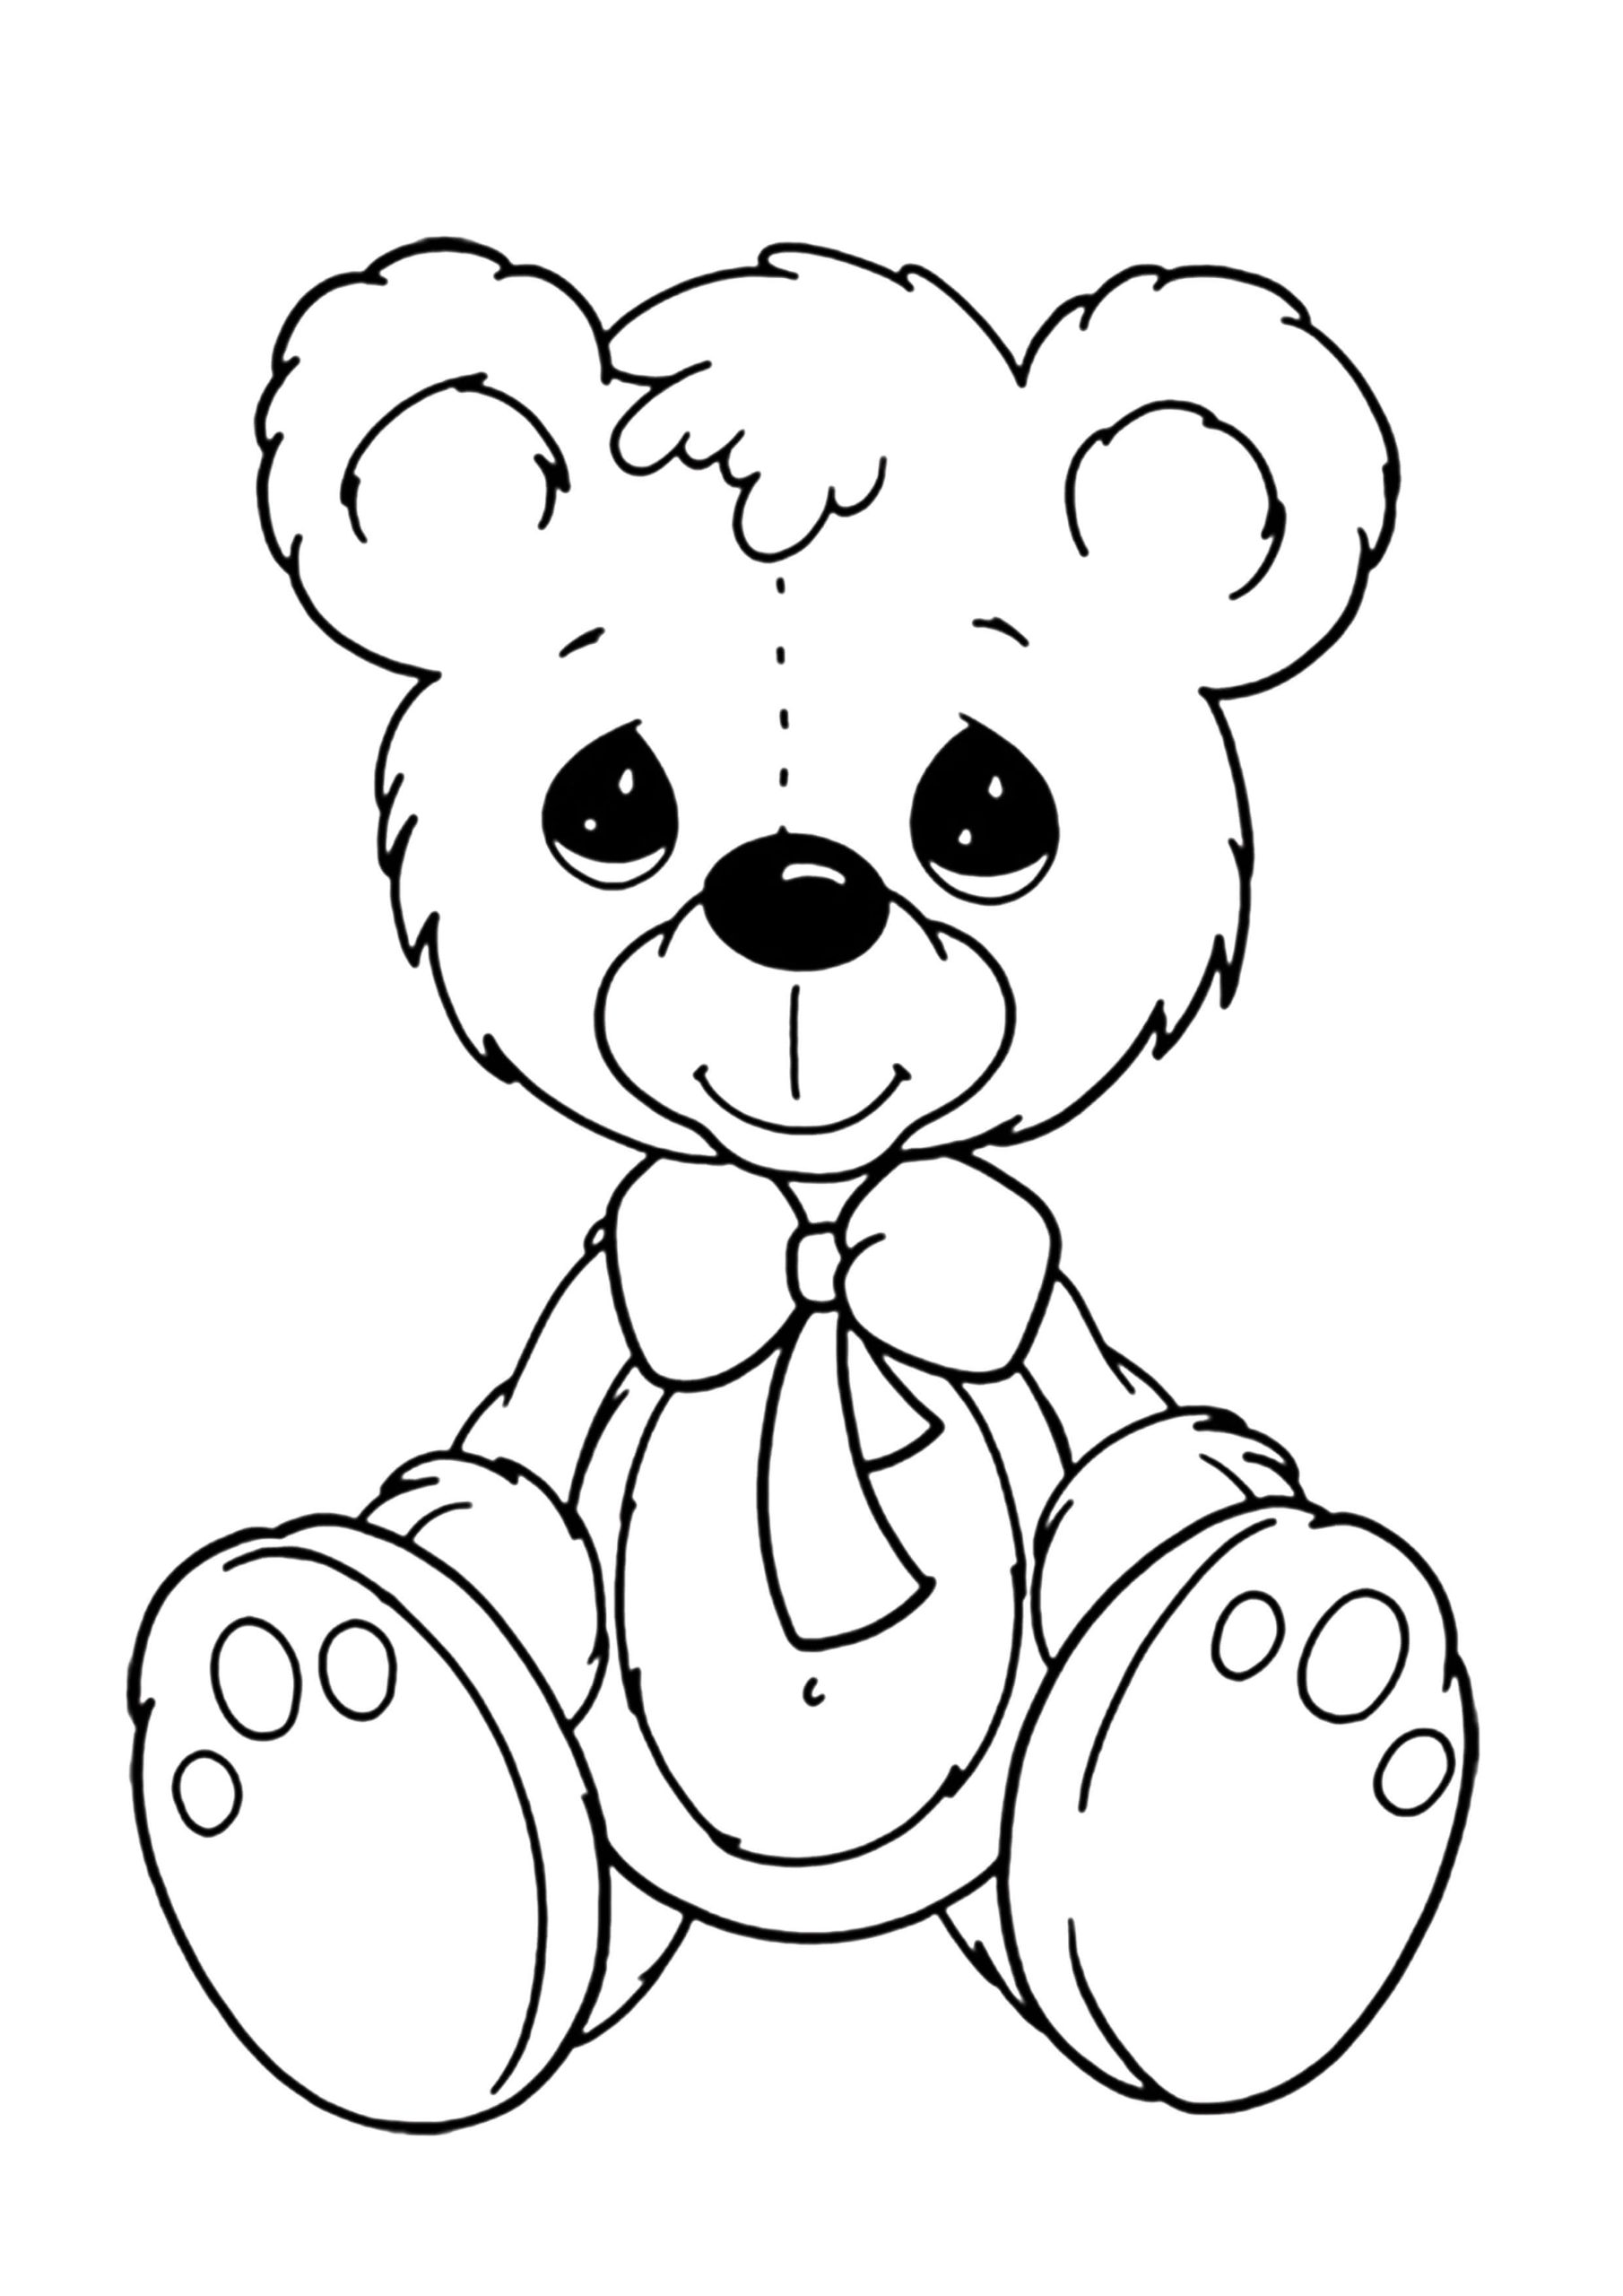 Coloring page Teddy Bears Cute teddy bear